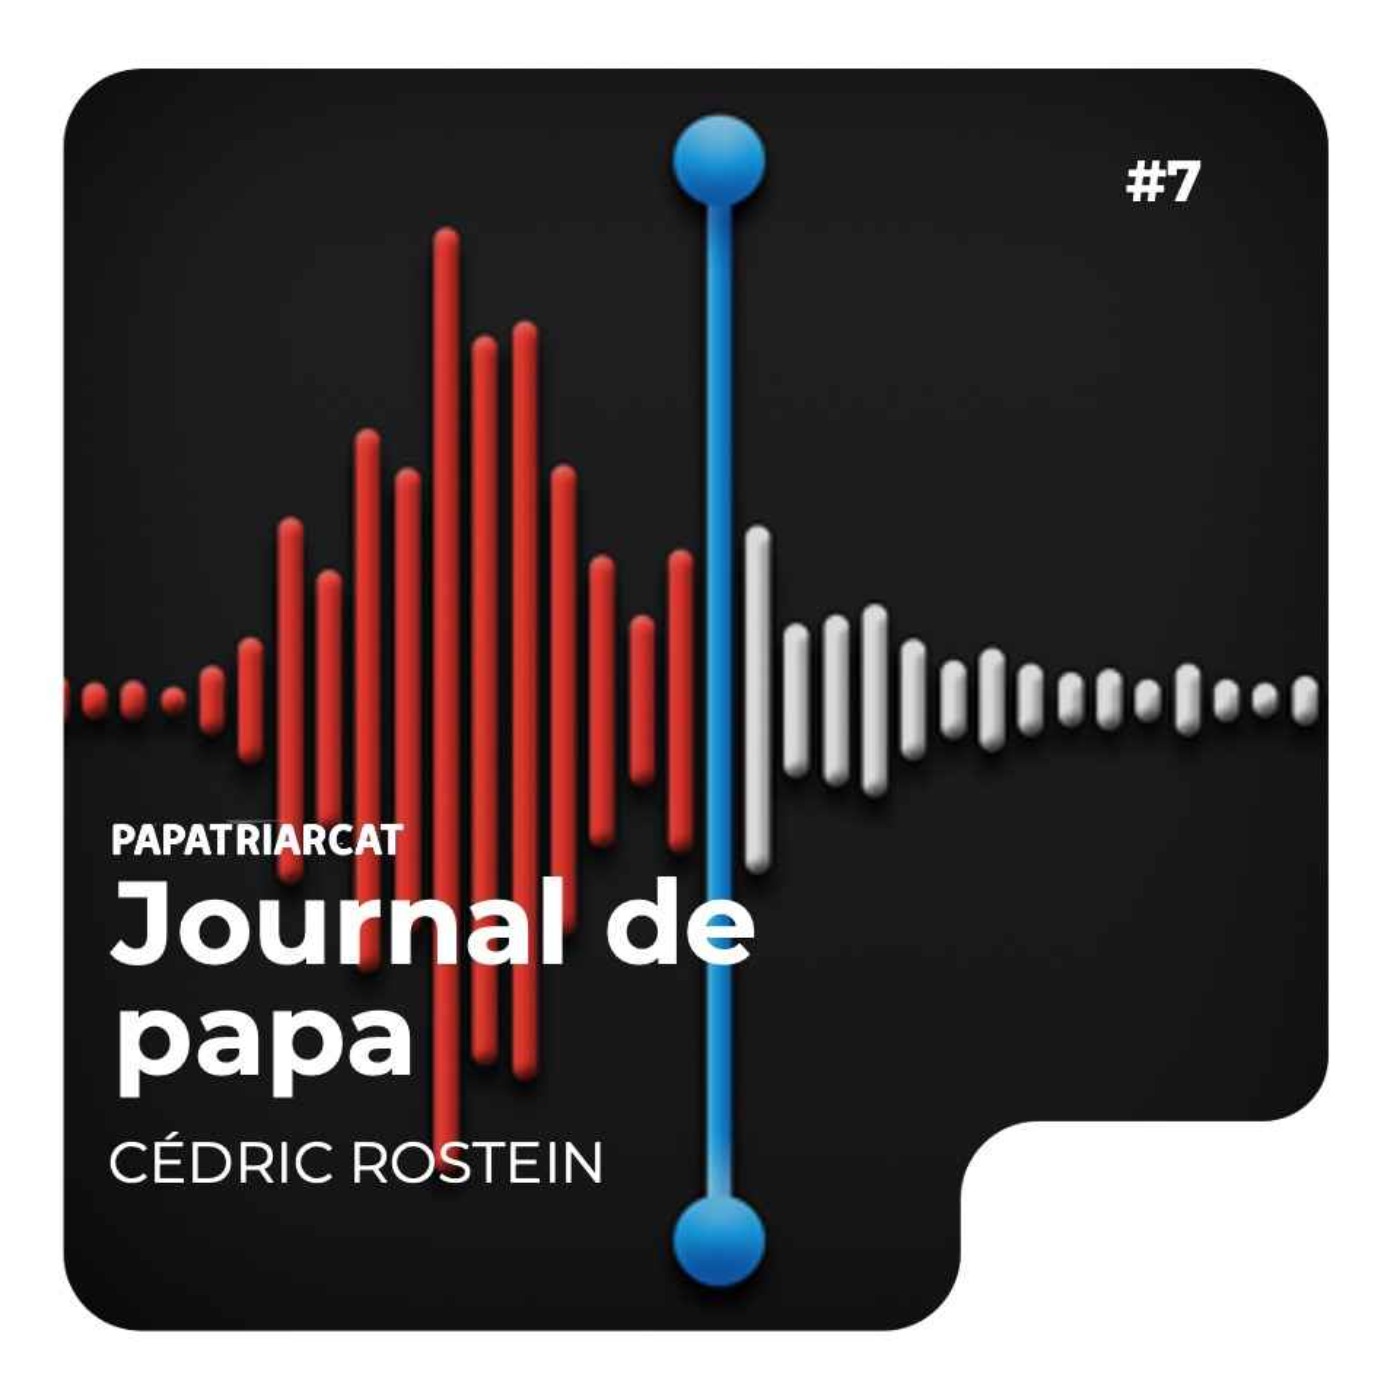 Journal de papa #7